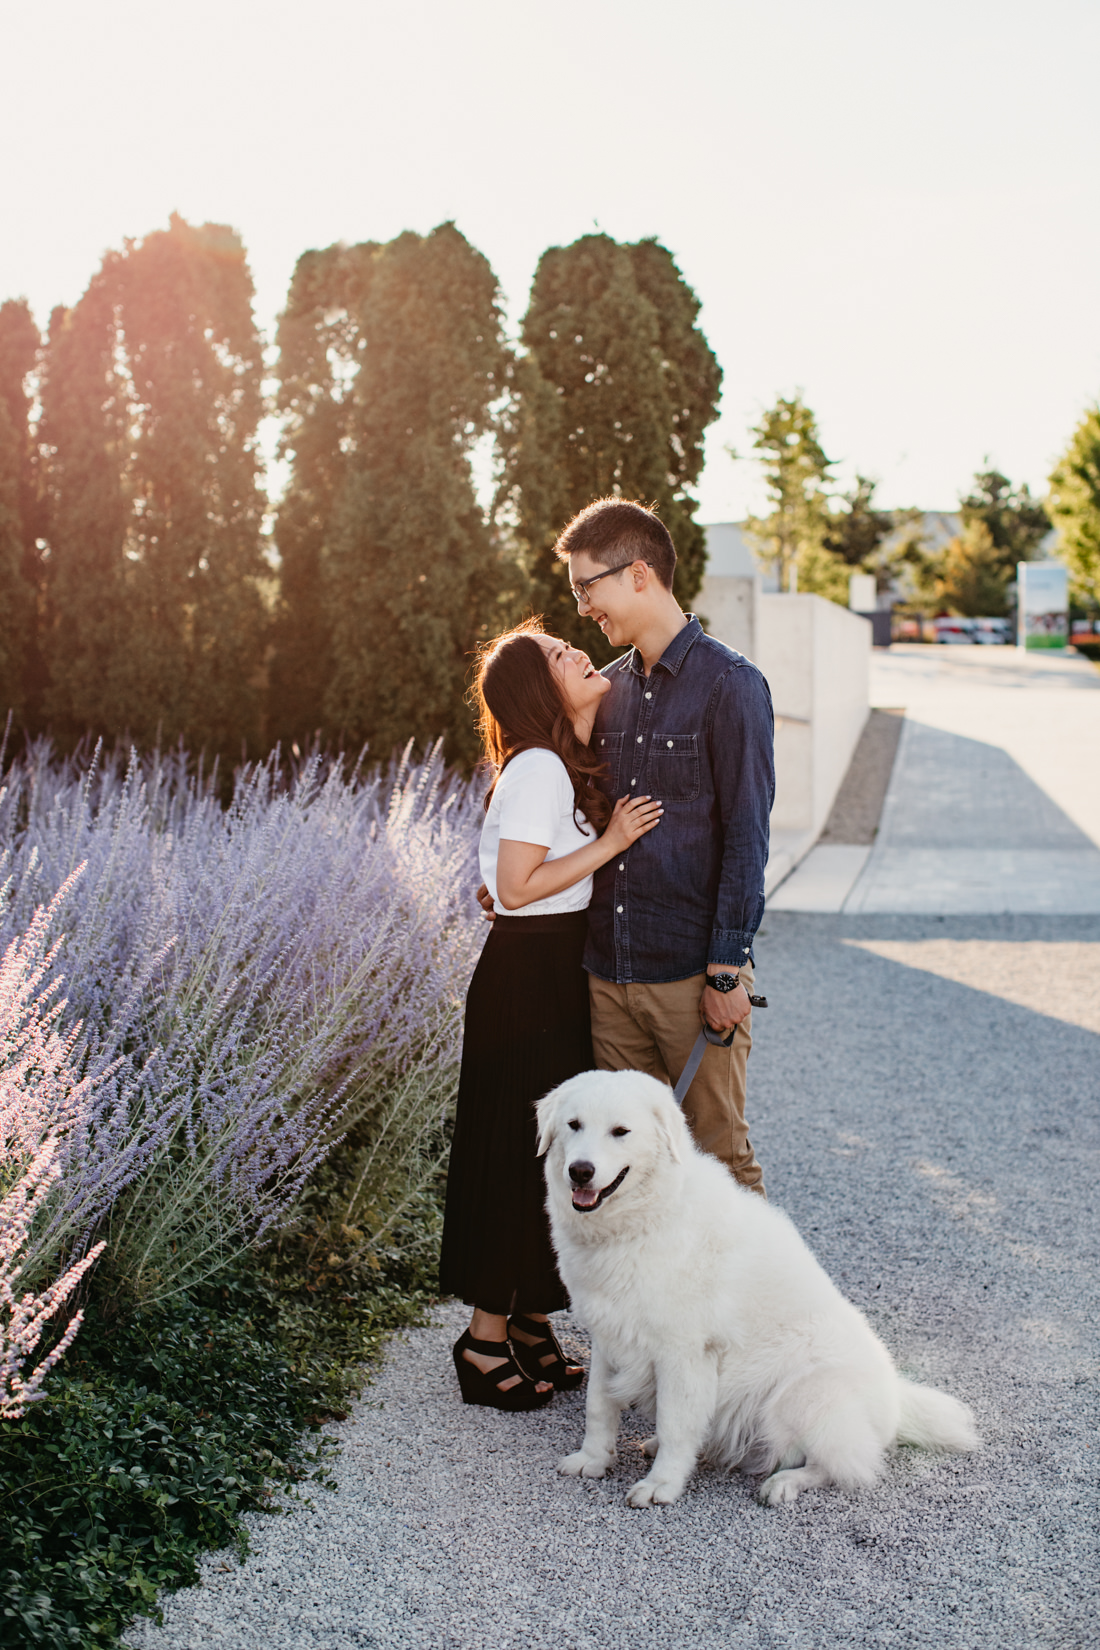 Engagement Photos with dog | Aga Khan Museum engagement | lavender portrait location | Toronto Wedding Photographer | EightyFifth Street Photography